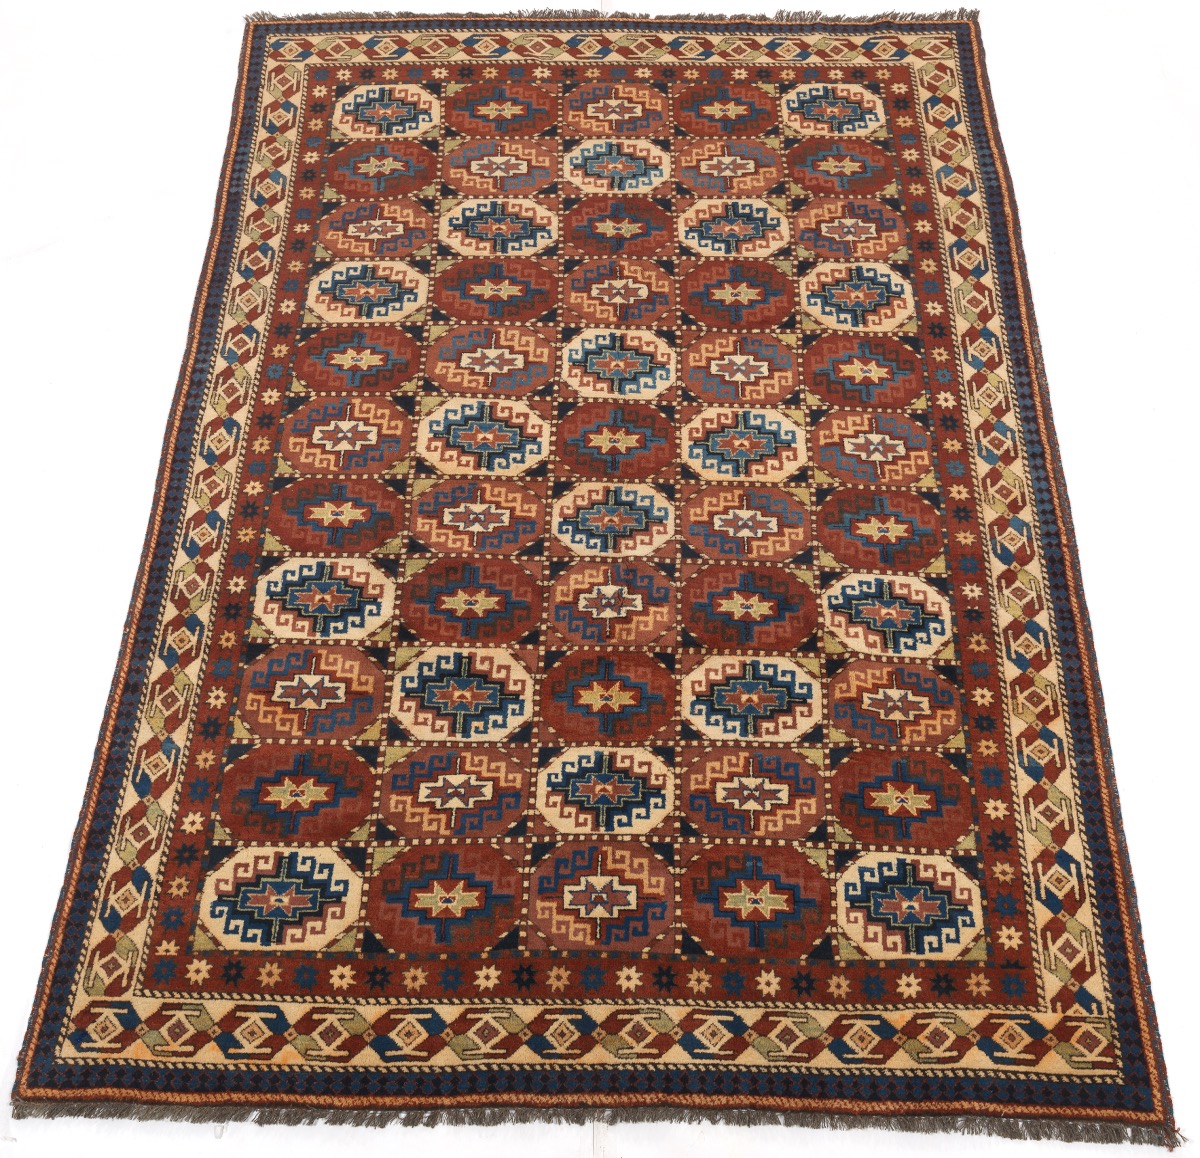 Fine Hand-Knotted Caucasian Carpet